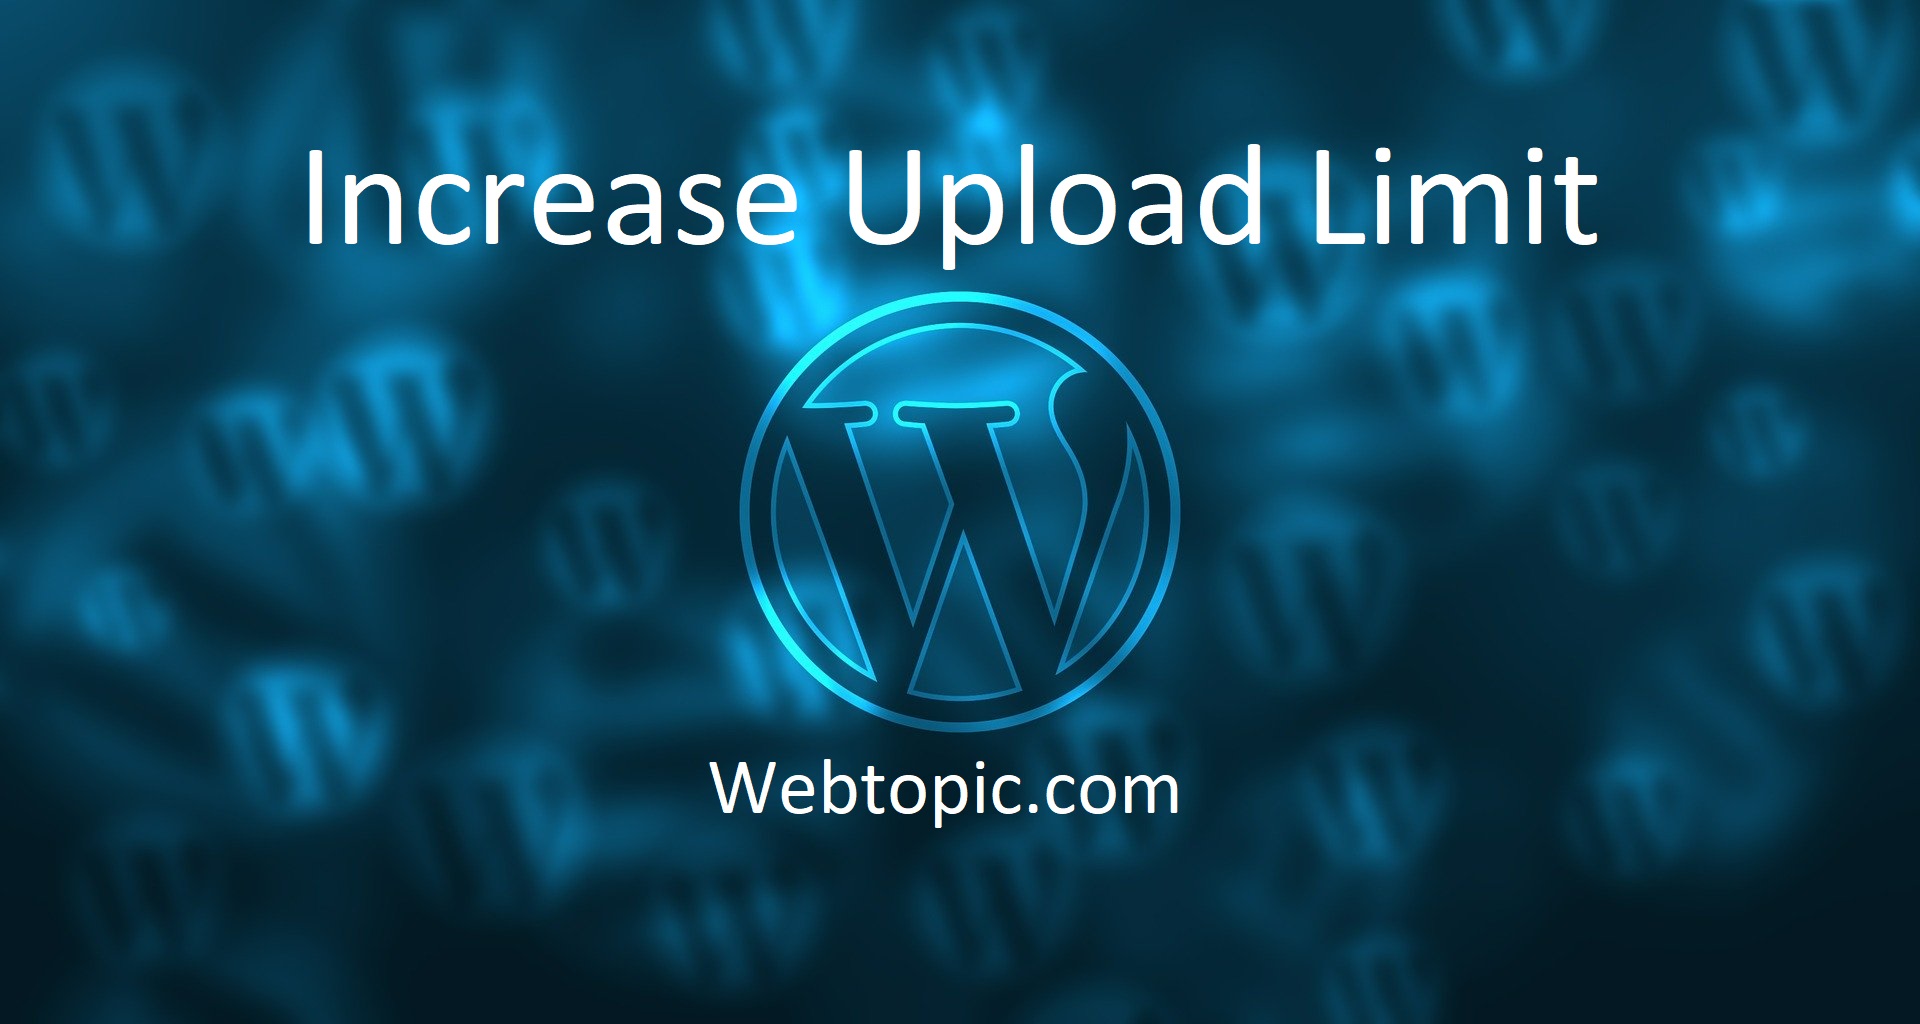 Increase upload limit in WordPress - Webtopic